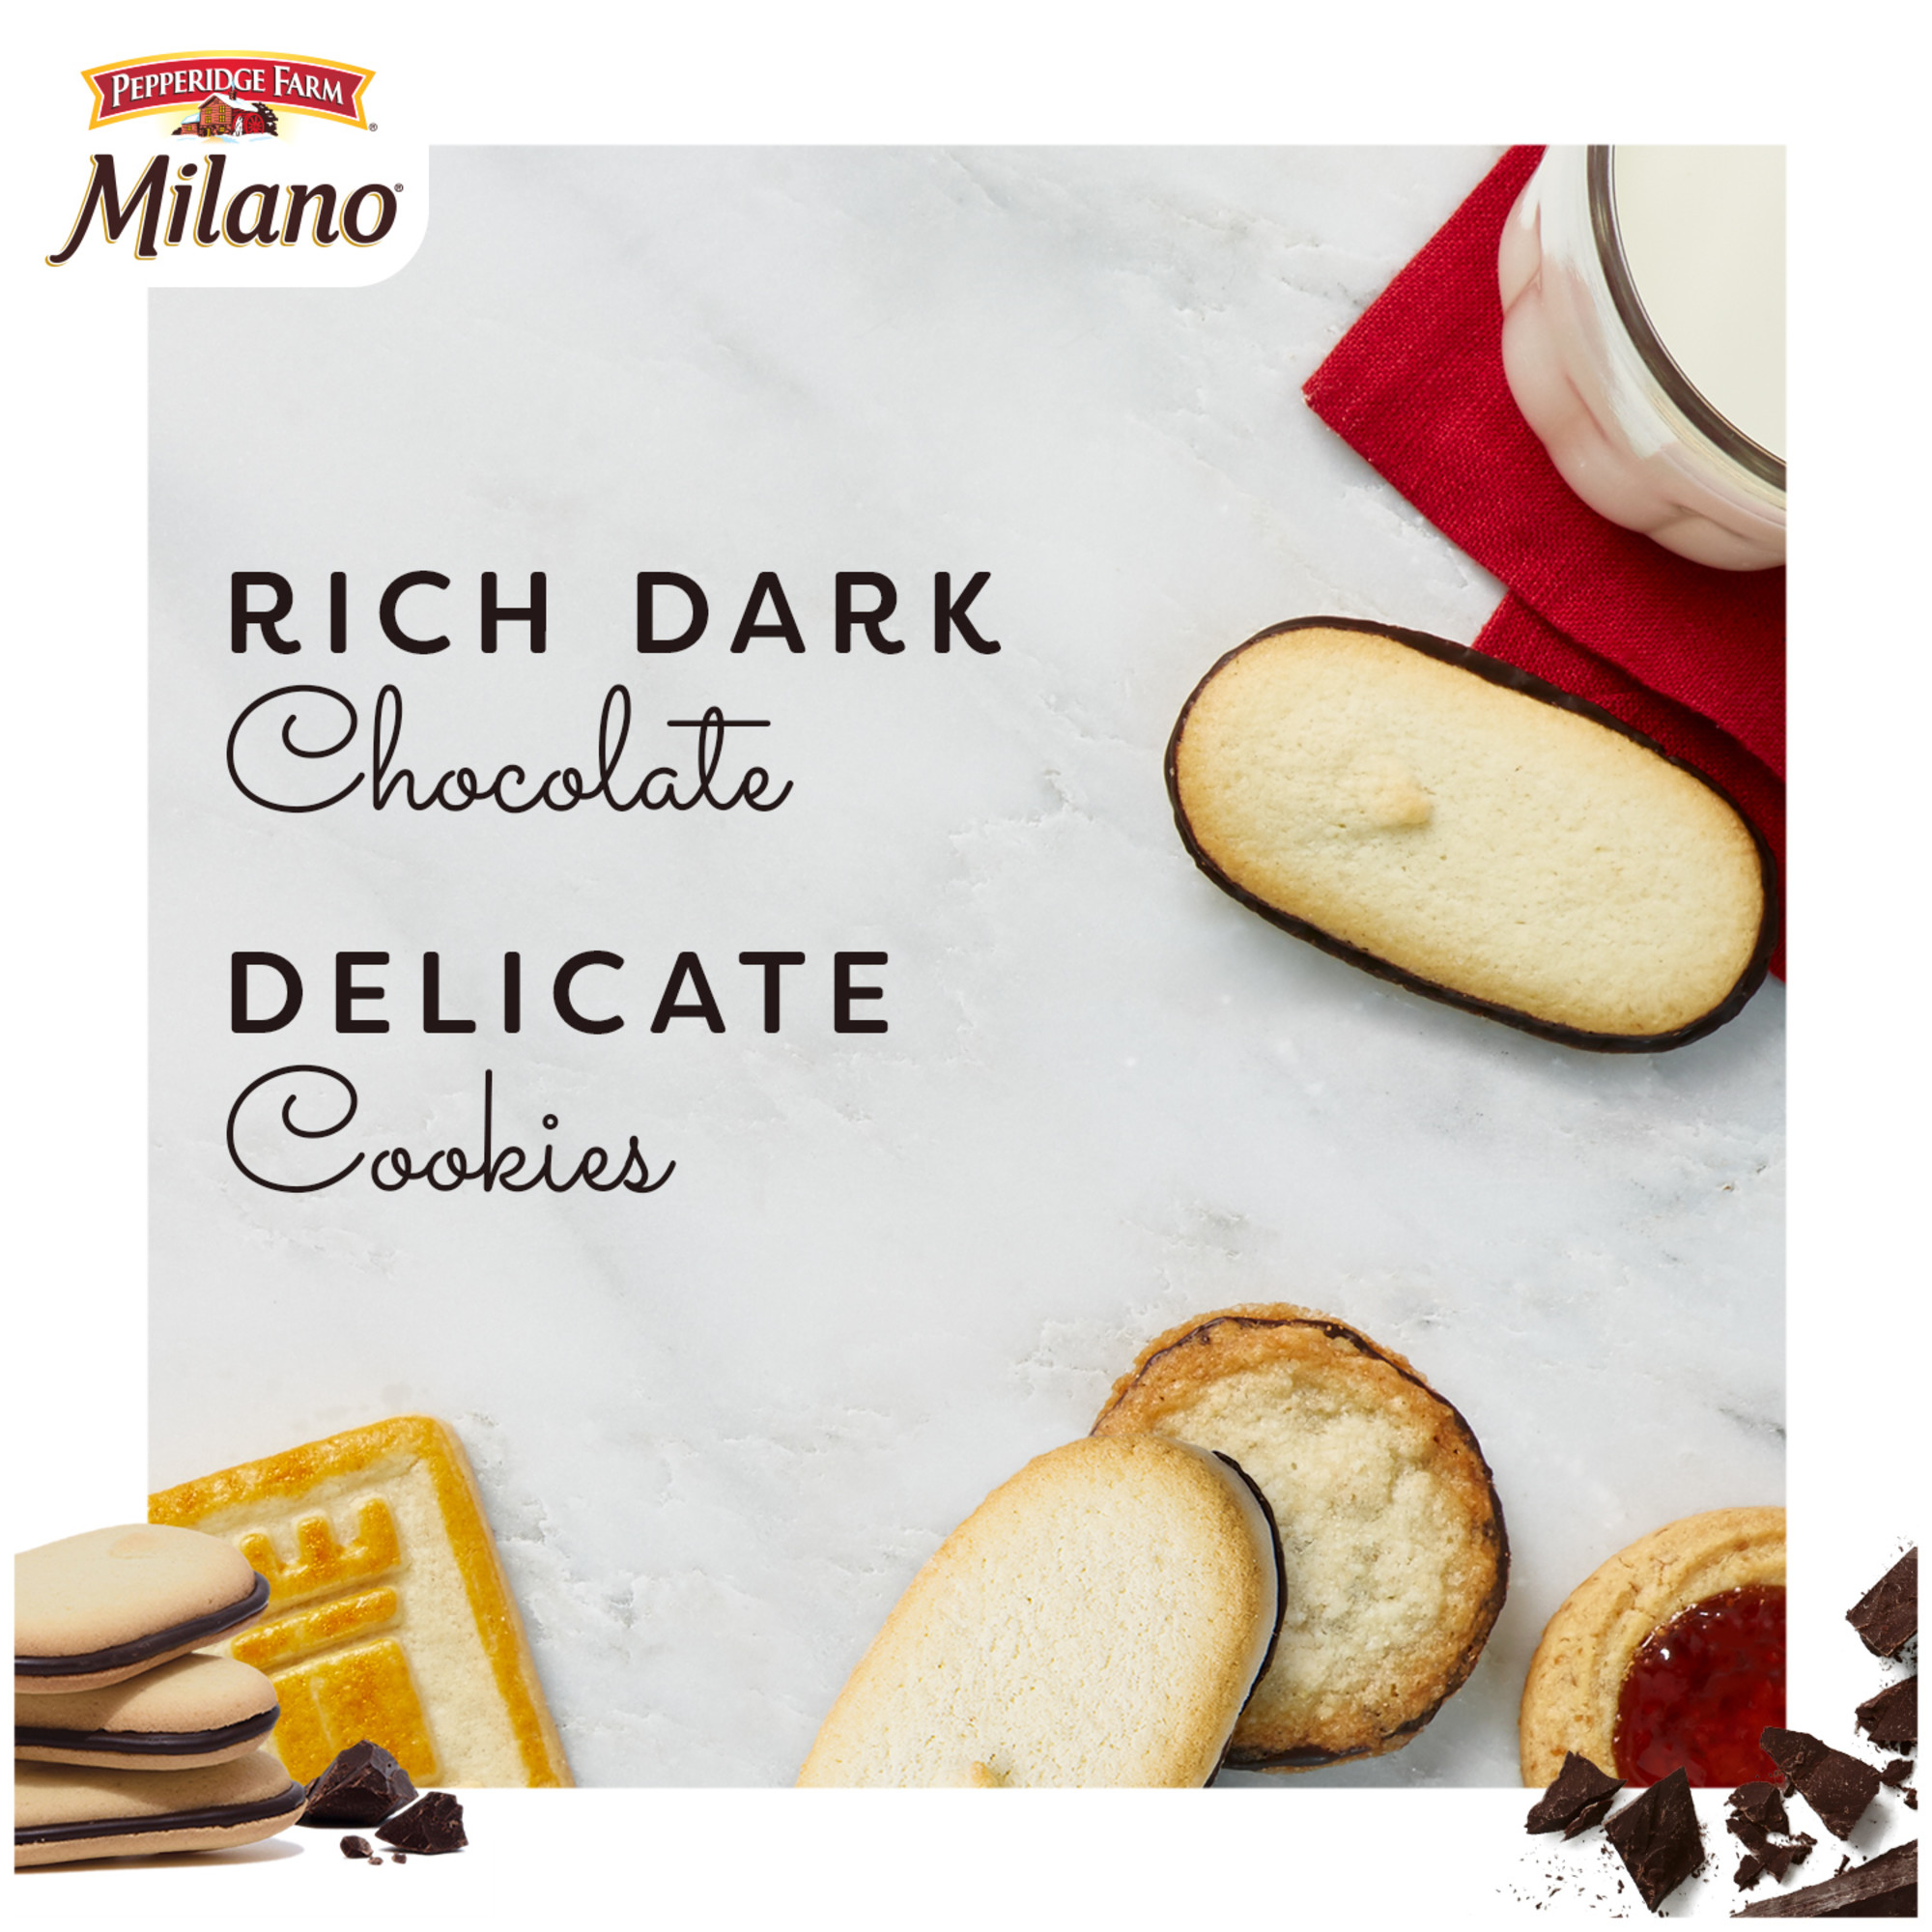 Pepperidge Farm Milano Dark Chocolate Cookies, 6 oz Bag (15 Cookies) - image 2 of 9